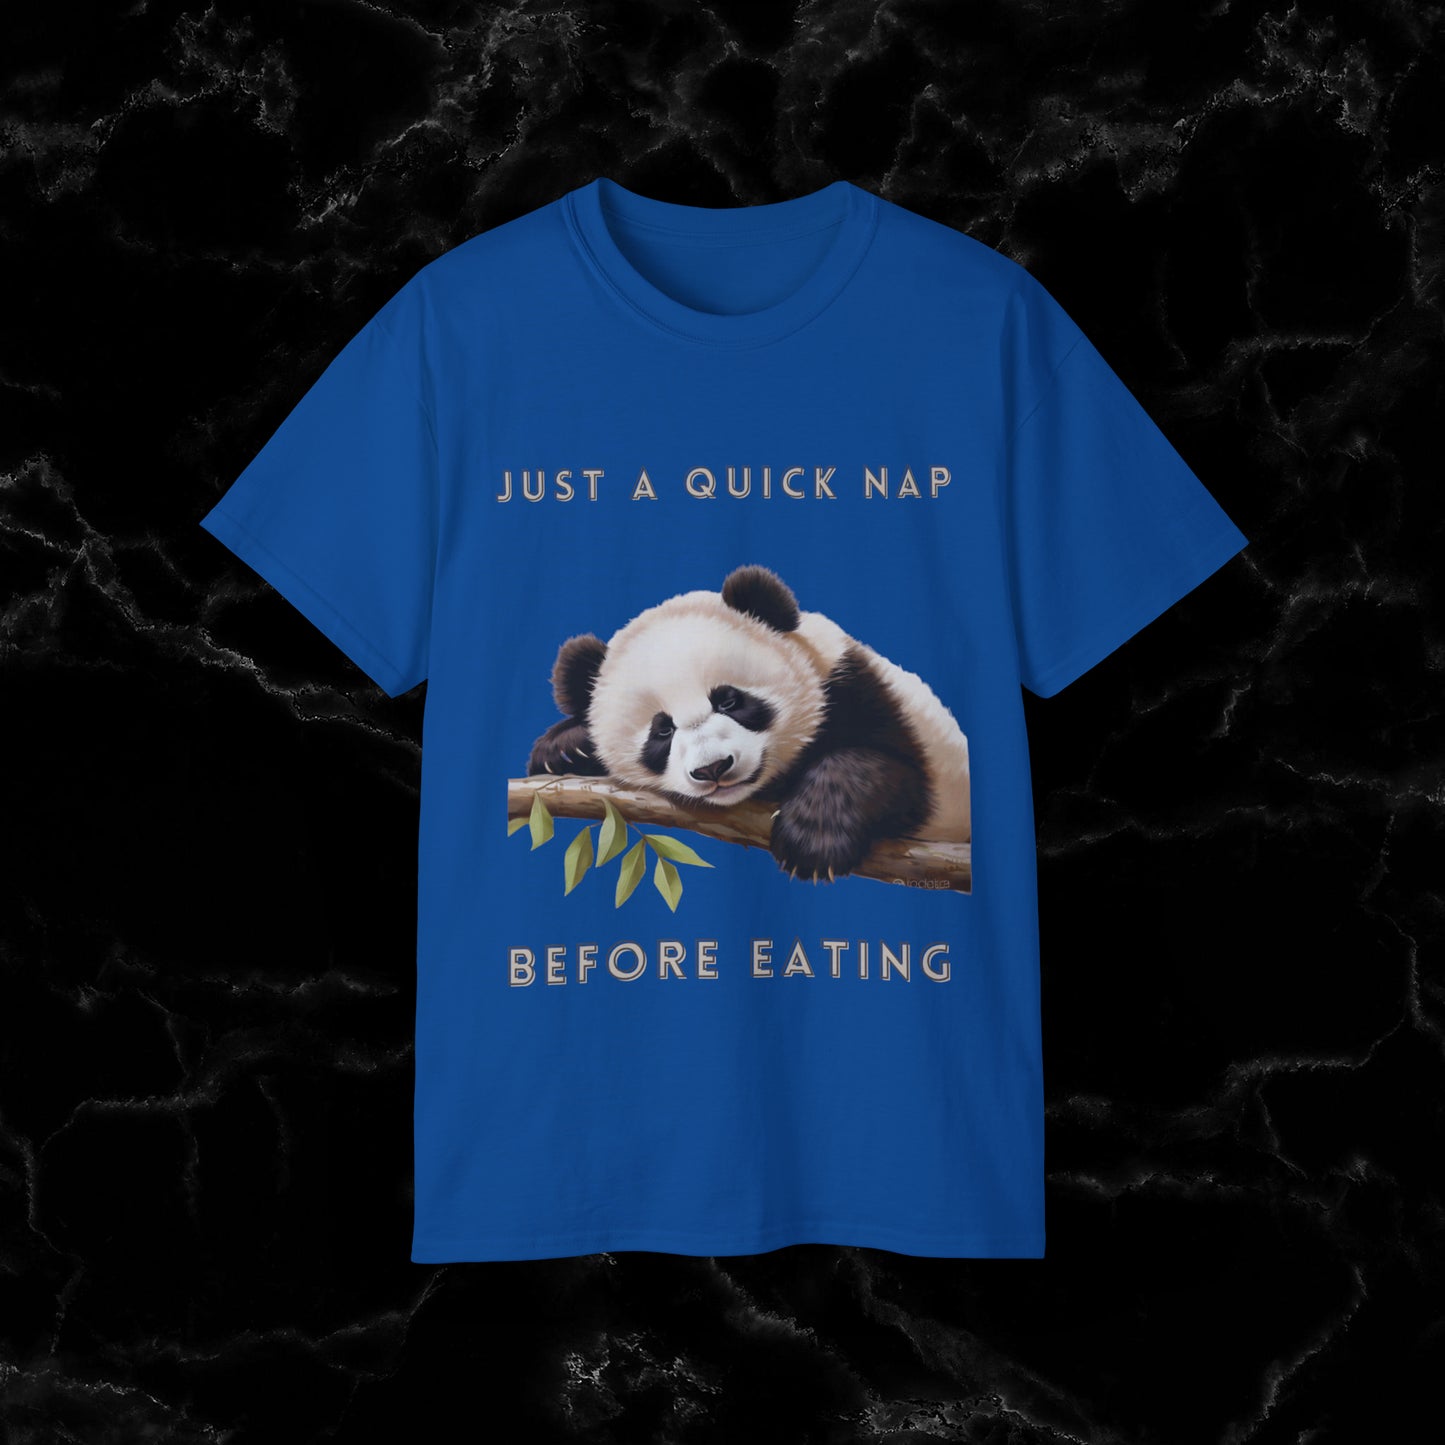 Nap Time Panda Unisex Funny Tee - Hilarious Panda Nap Design - Just a Quick Nap Before Eating T-Shirt Royal L 